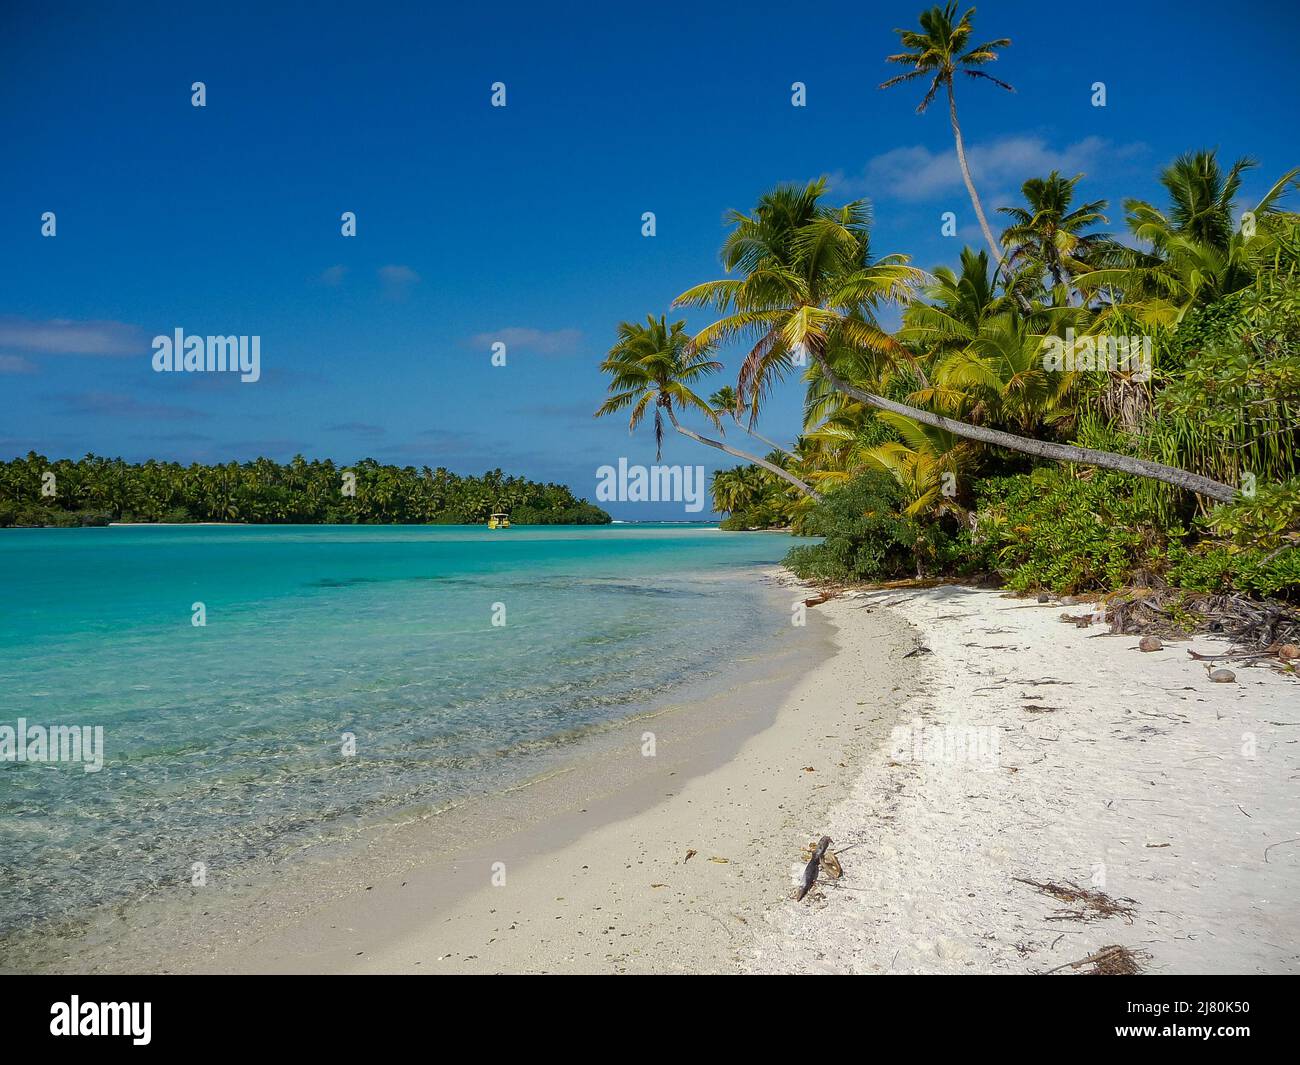 Palmeras en una playa tropical, laguna Aitutaki, Islas Cook Foto de stock